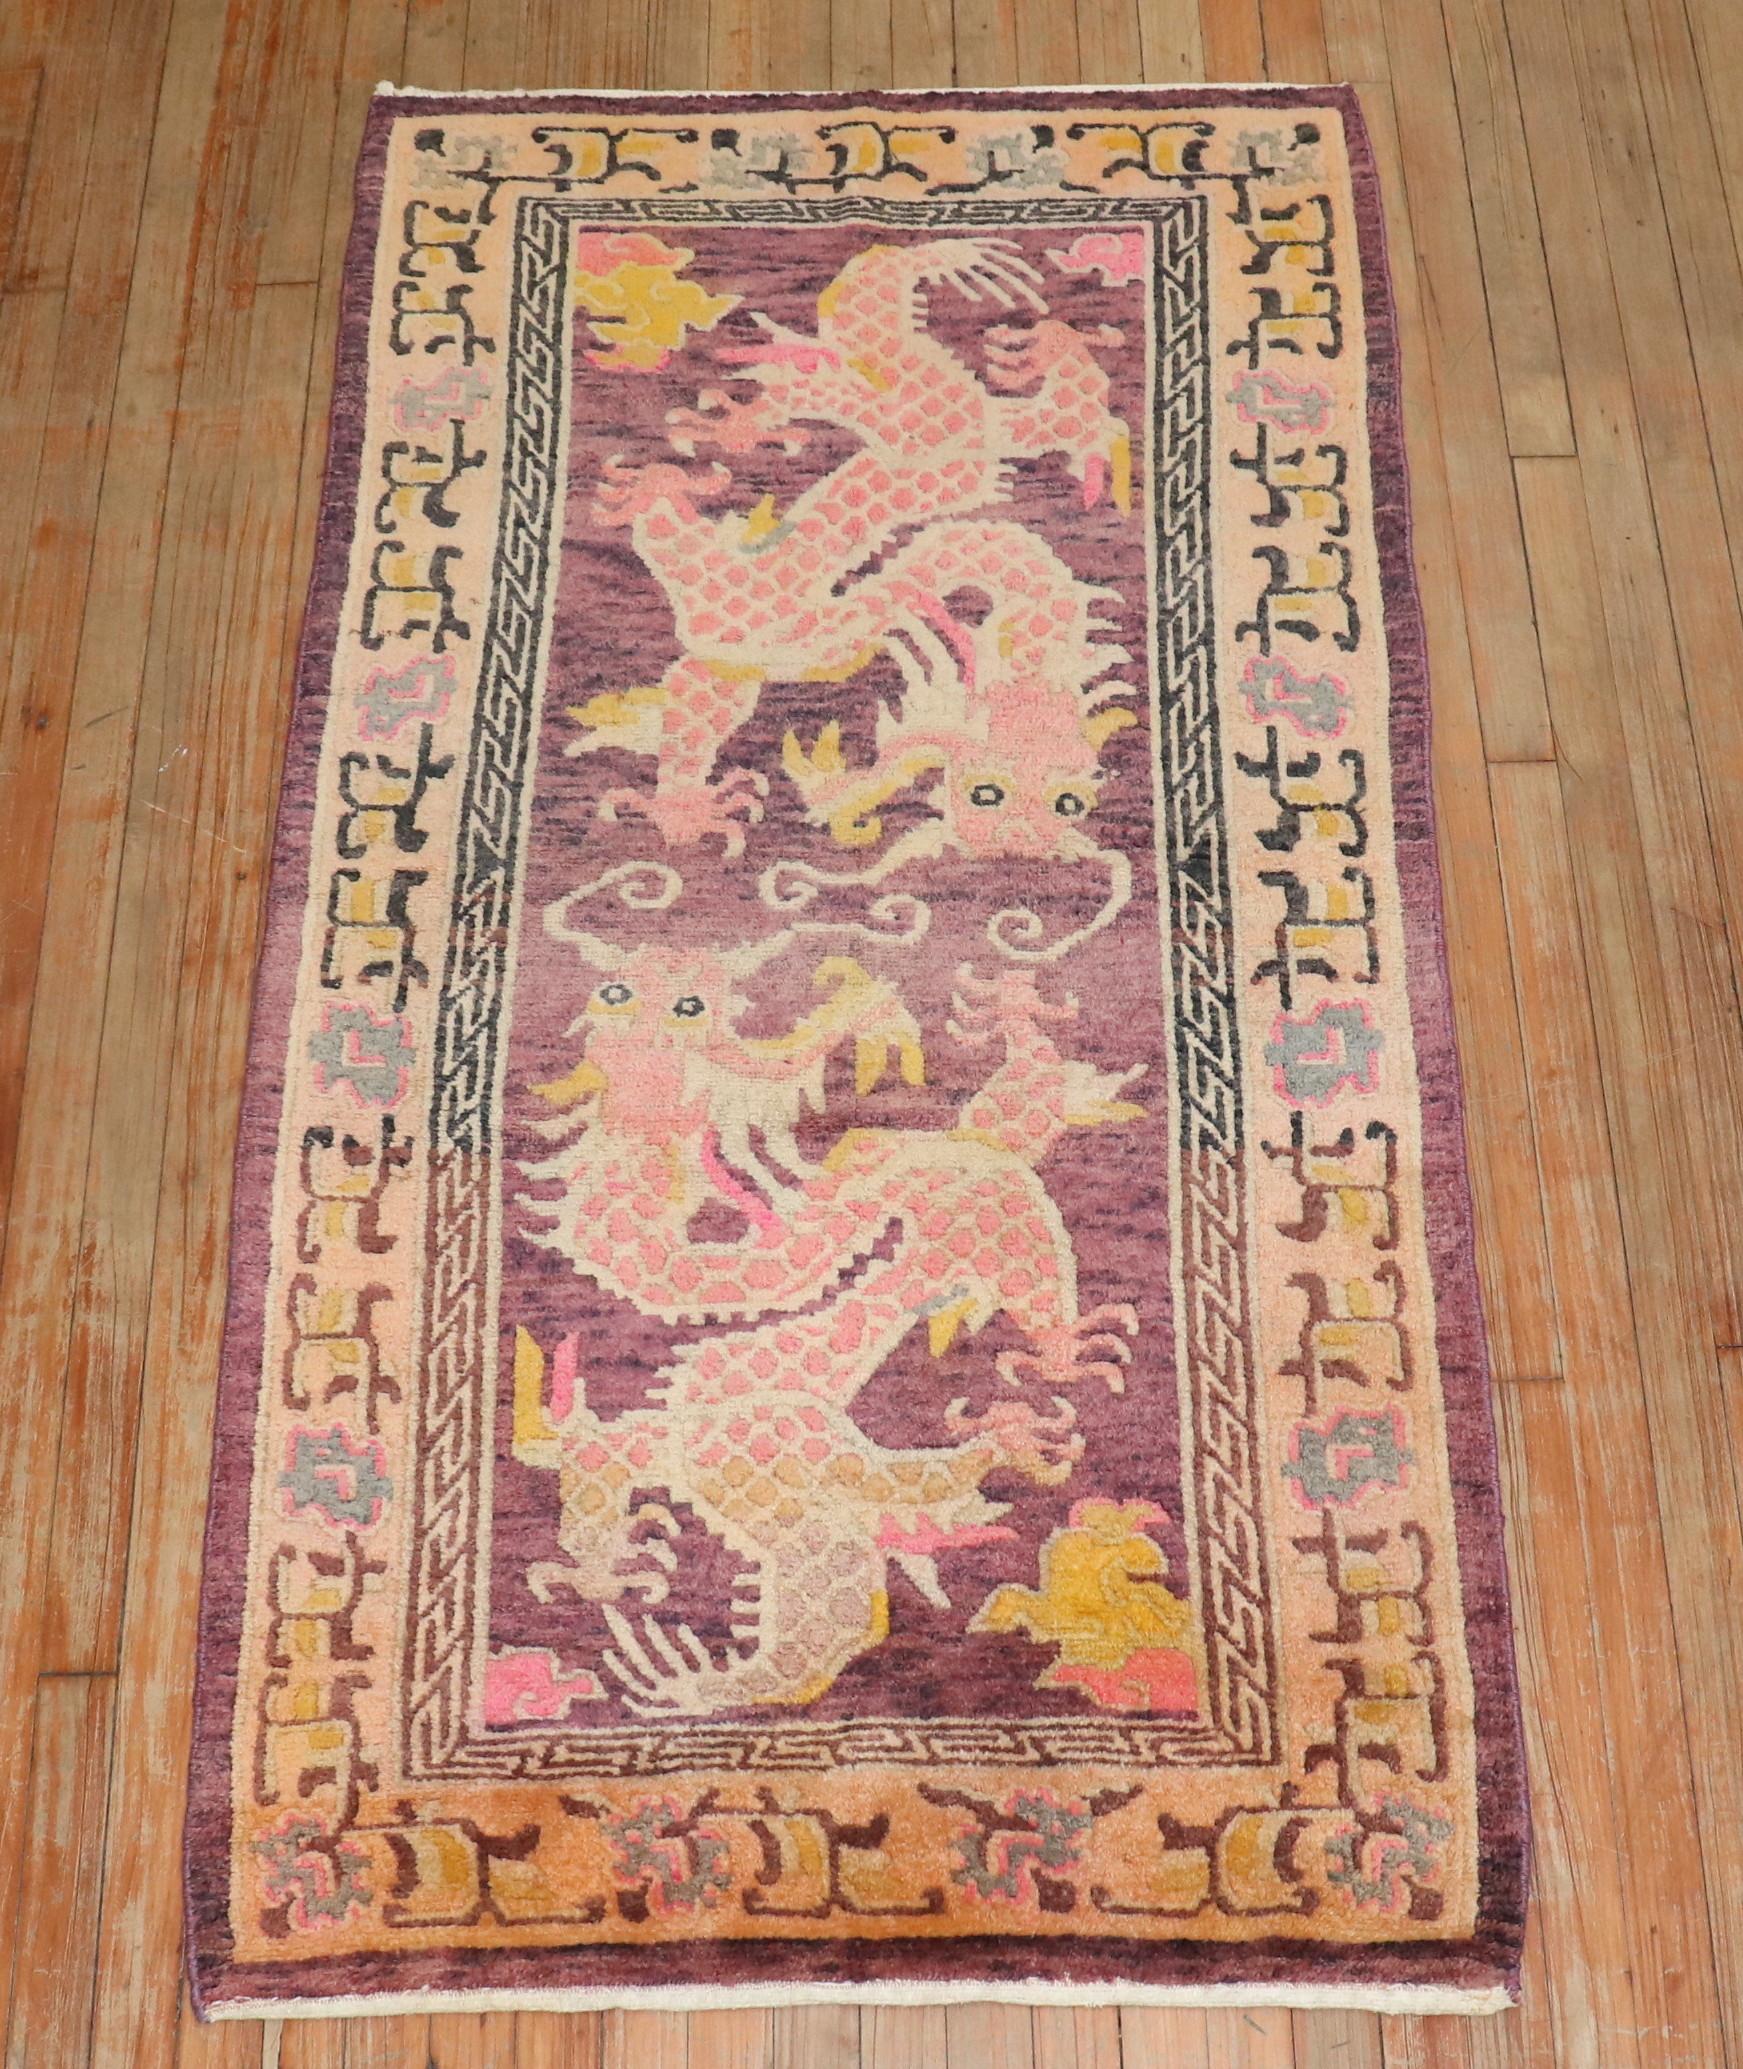 Folk Art Zabihi Collection Lavender Dragon Vintage Tibetan Rug